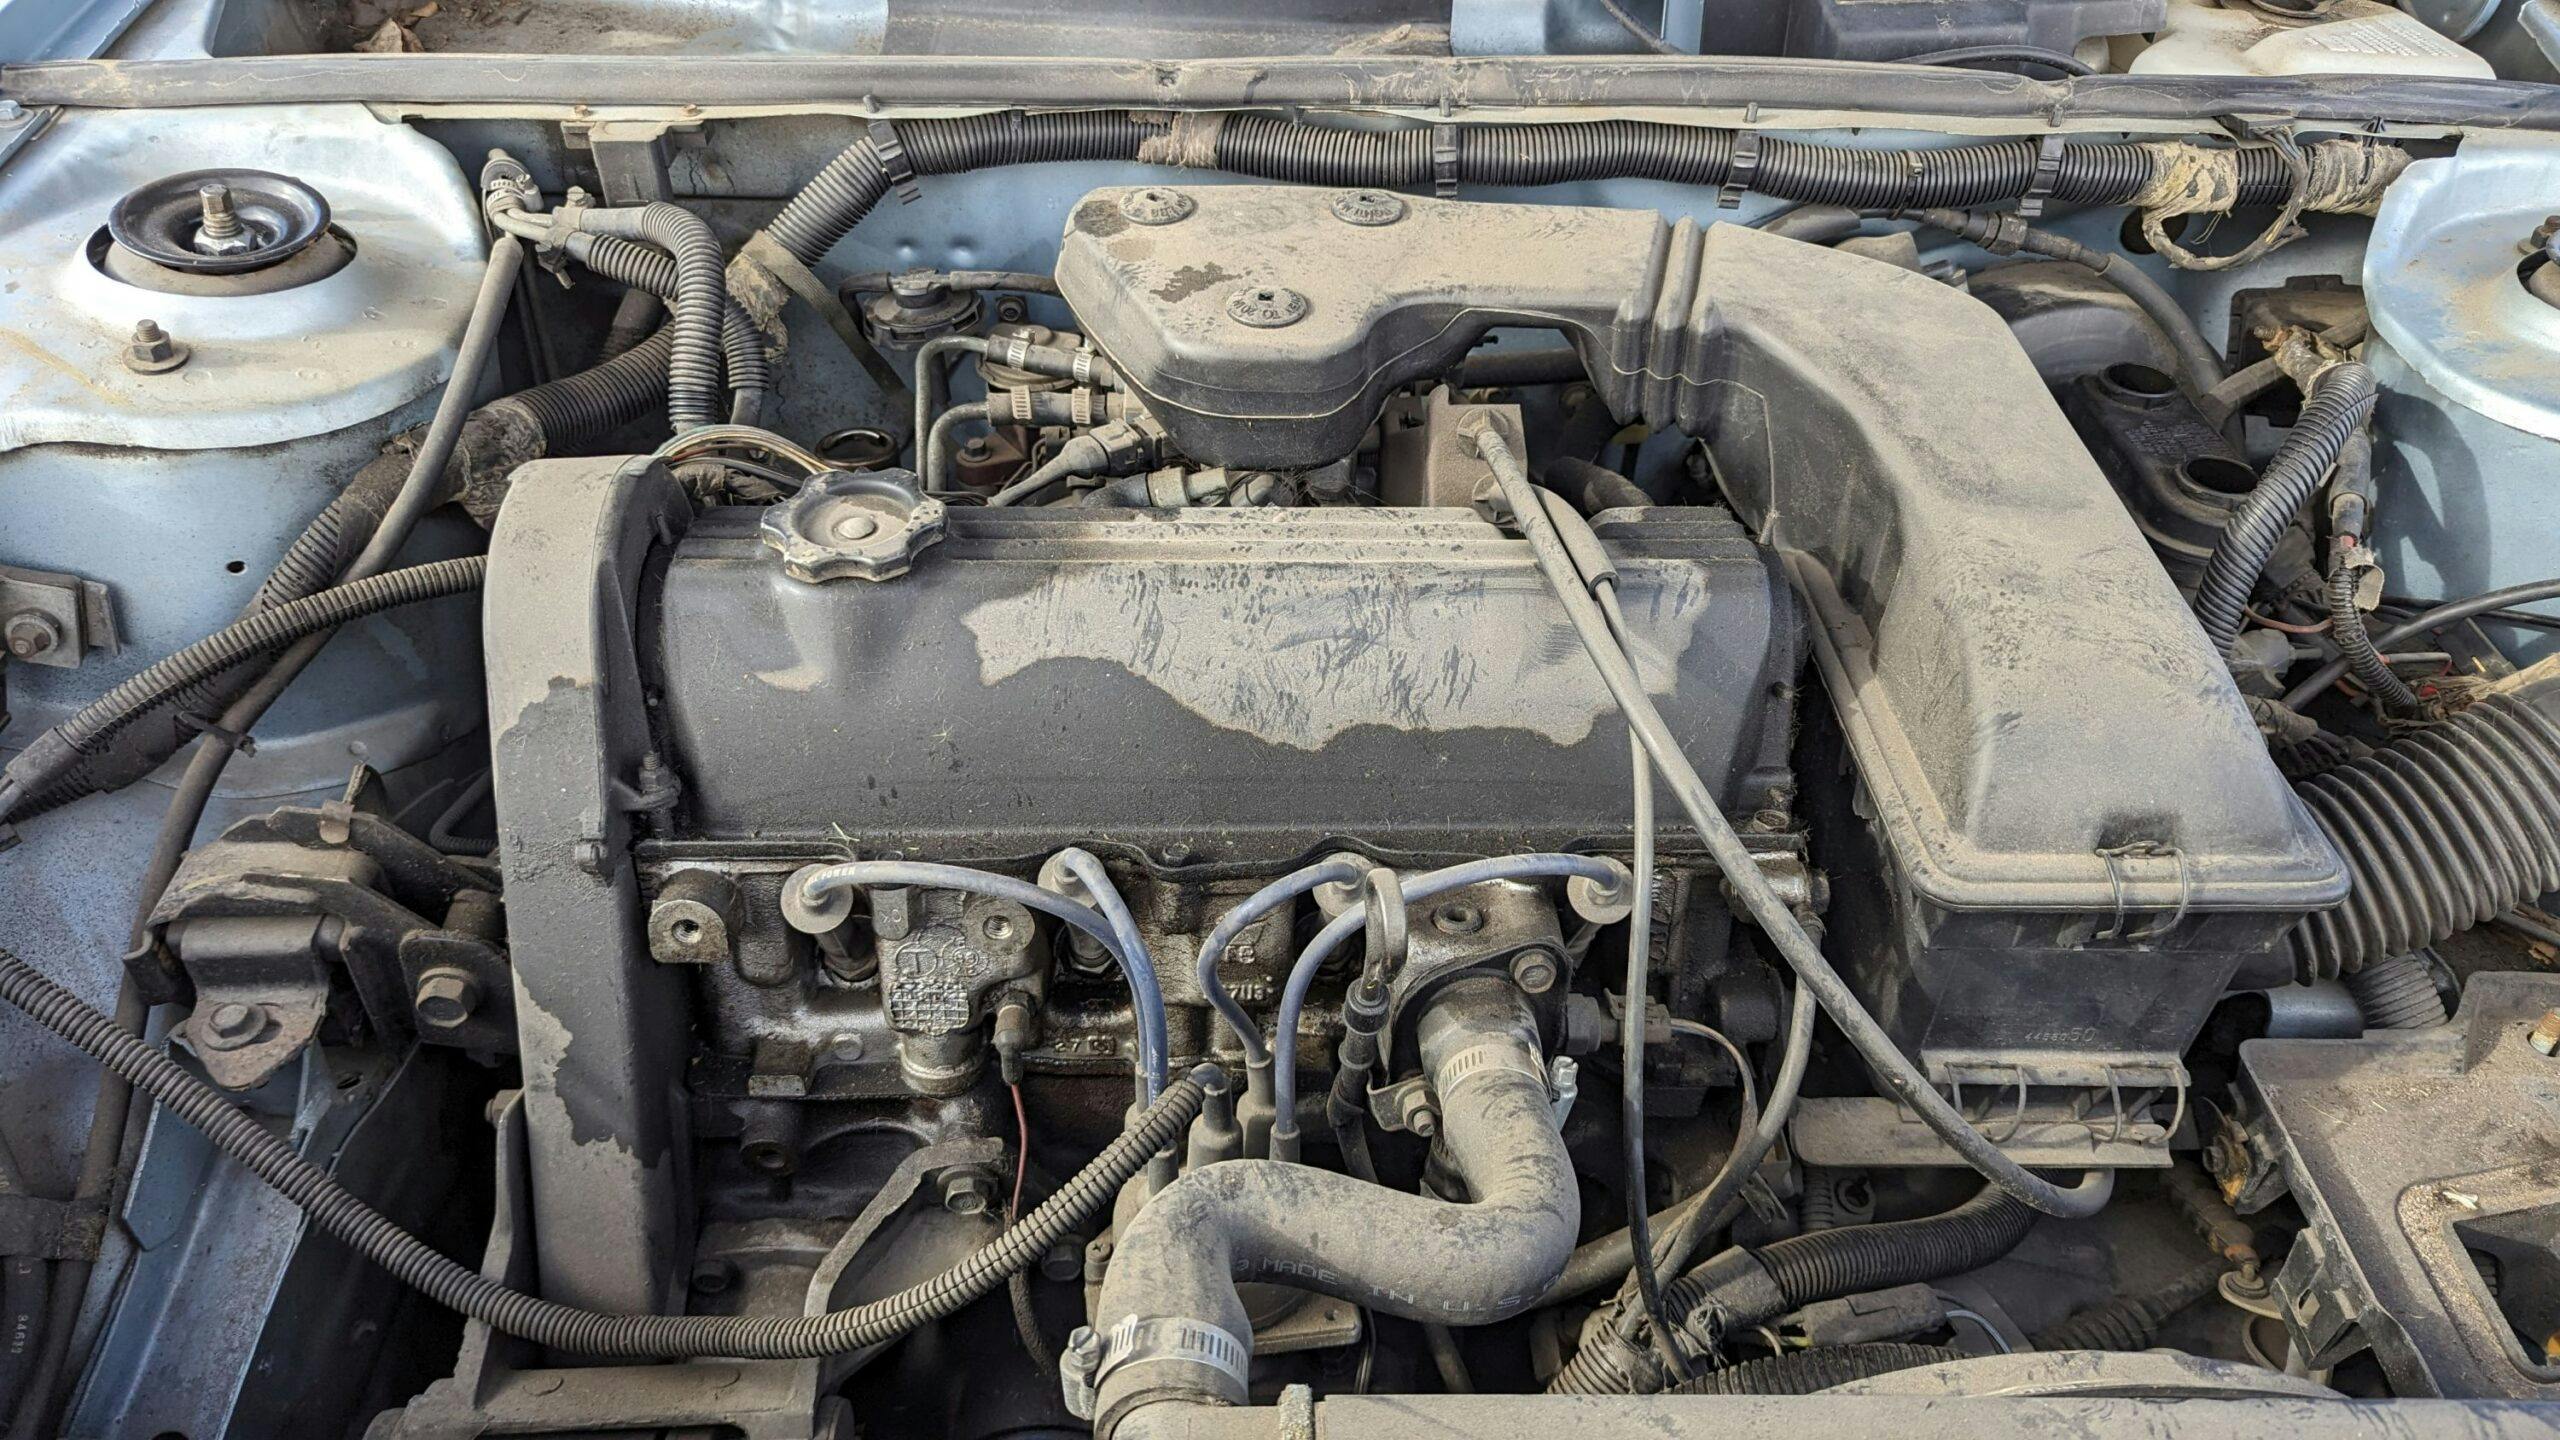 1988 Plymouth Horizon America engine